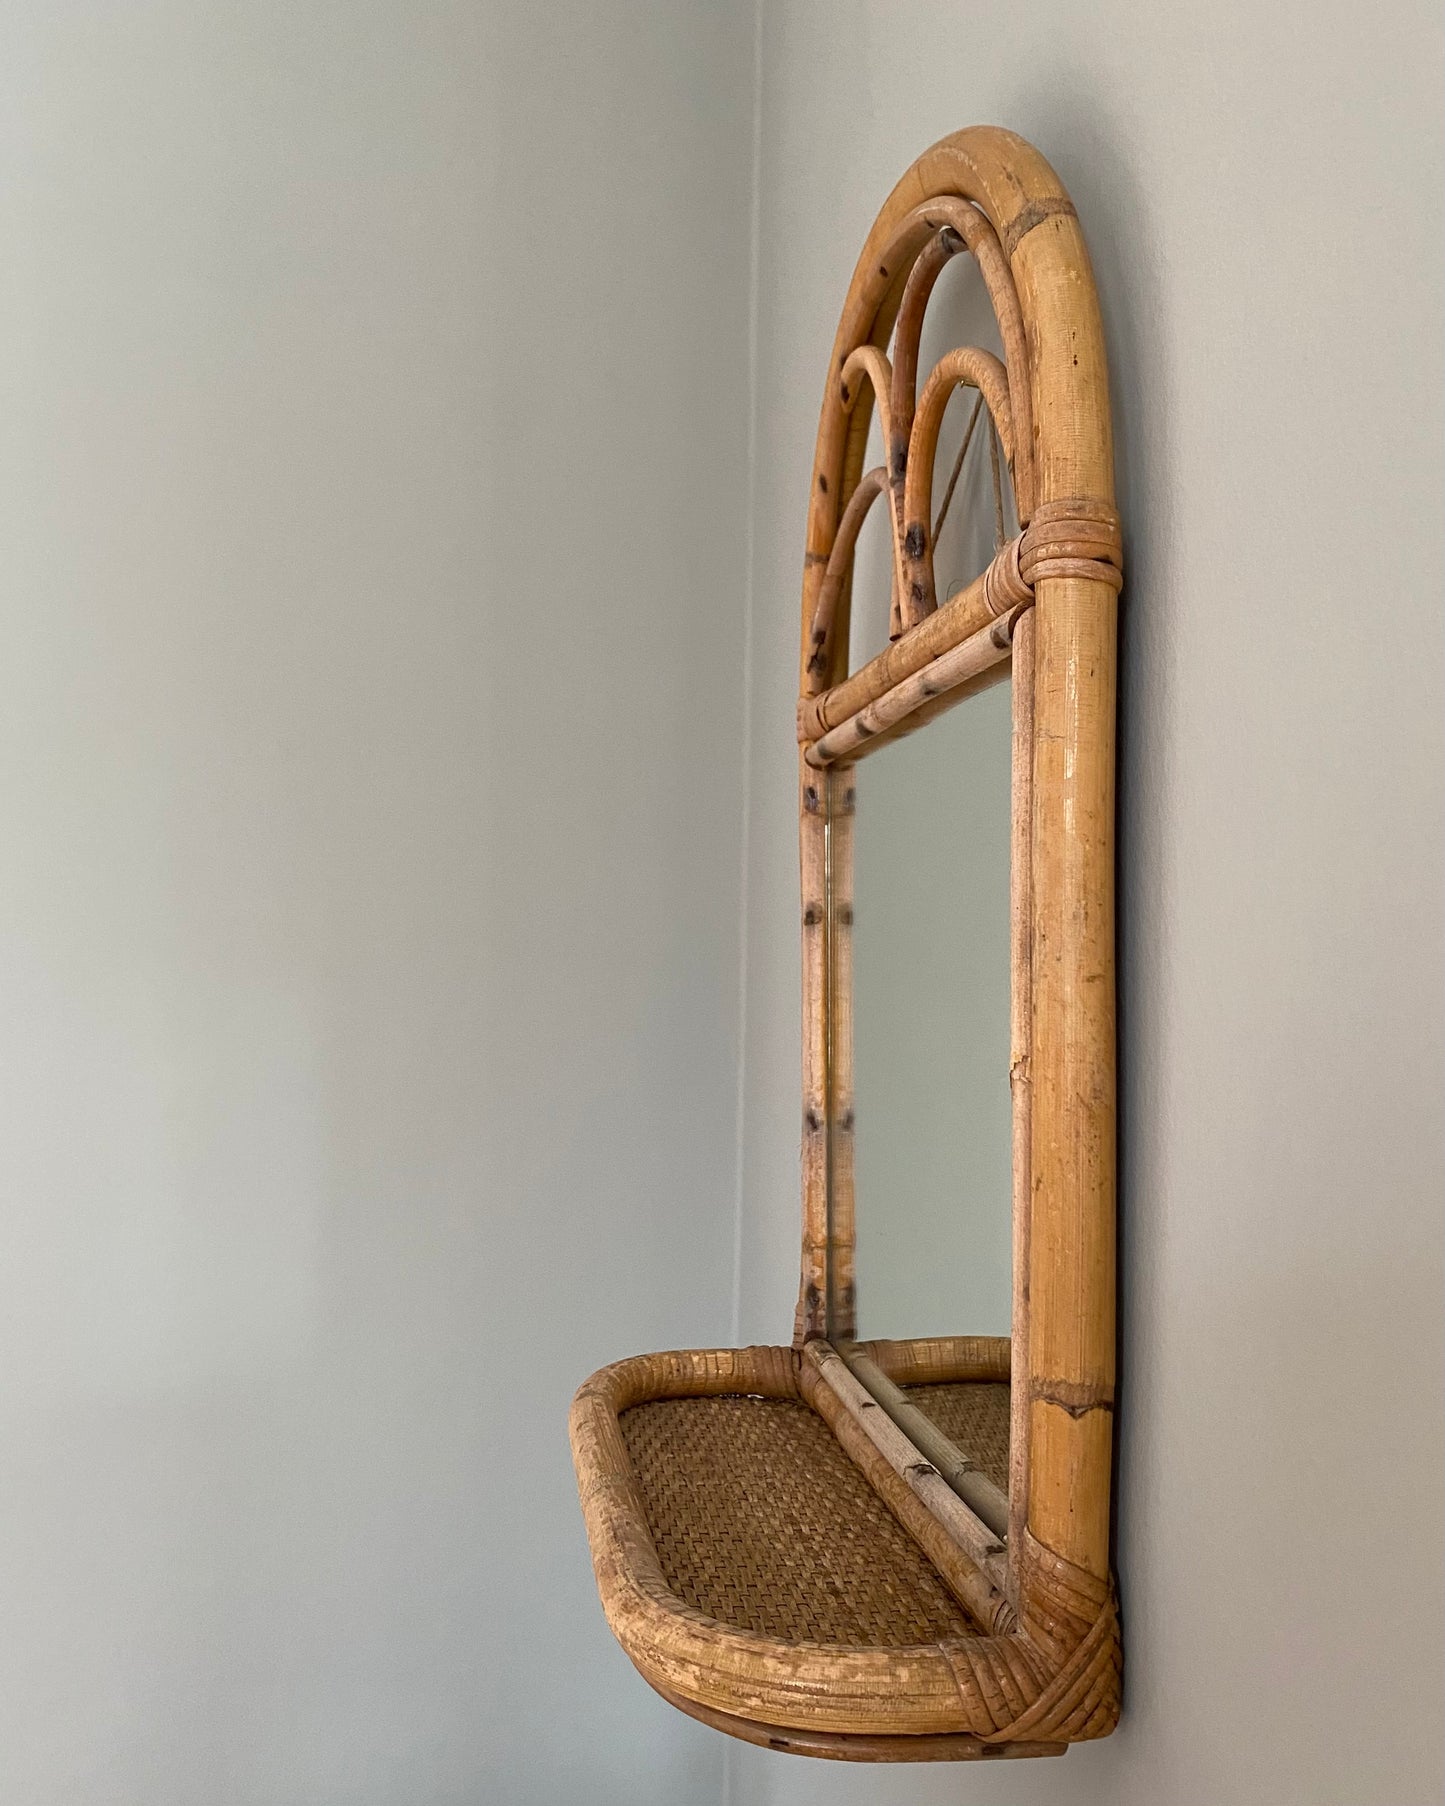 Vintage mirror with rattan shelf